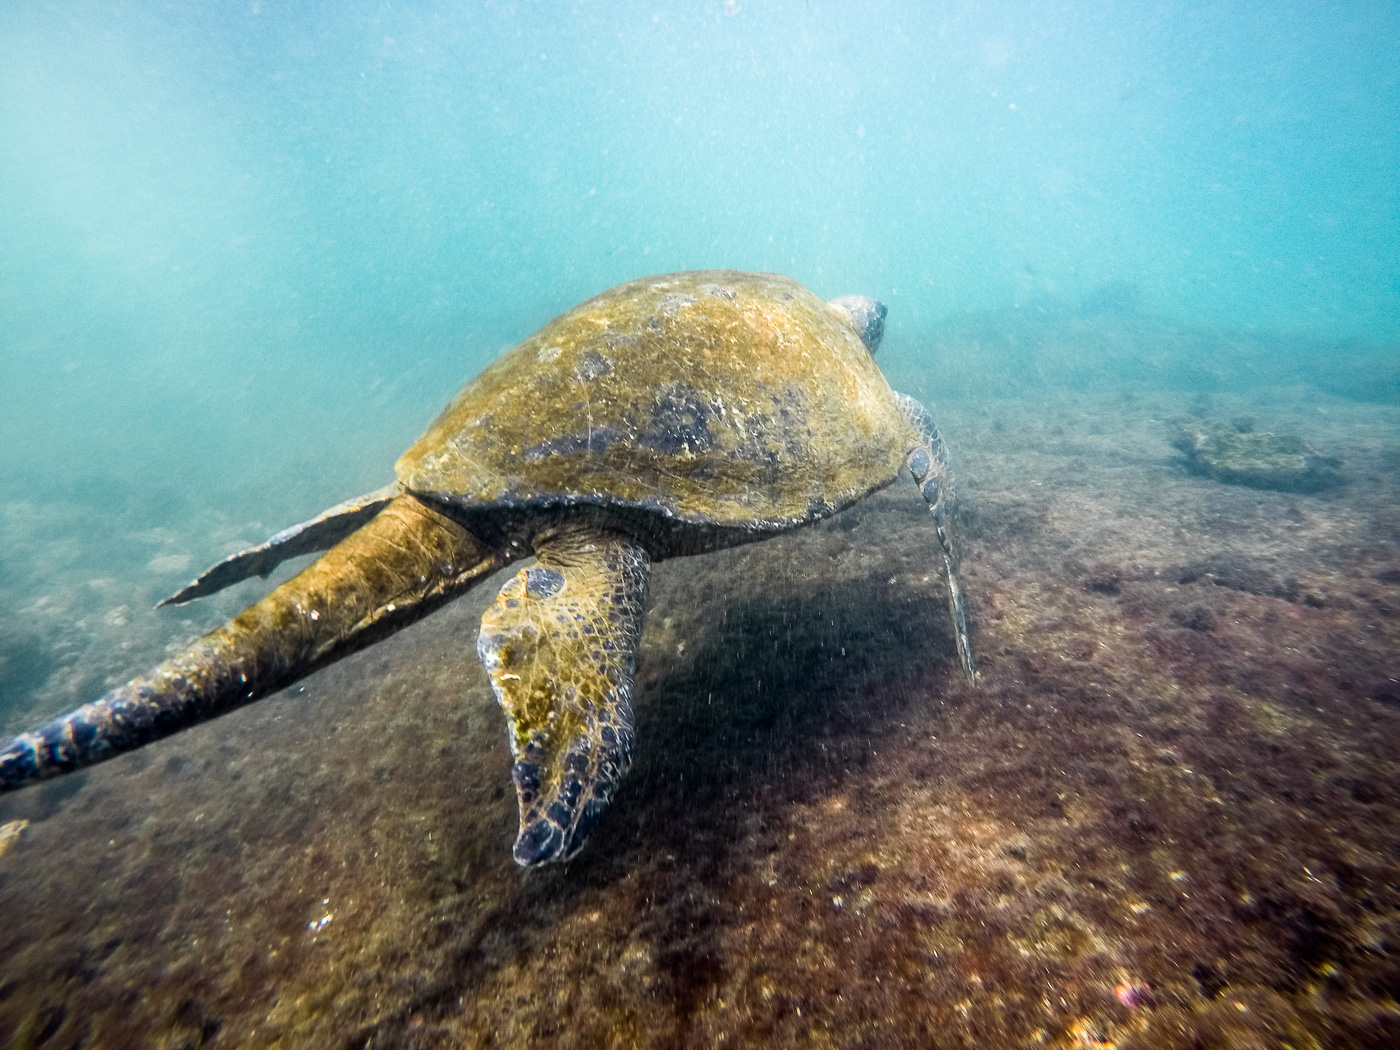 Long-tailed sea turtle, Isla Isabela Galapagos